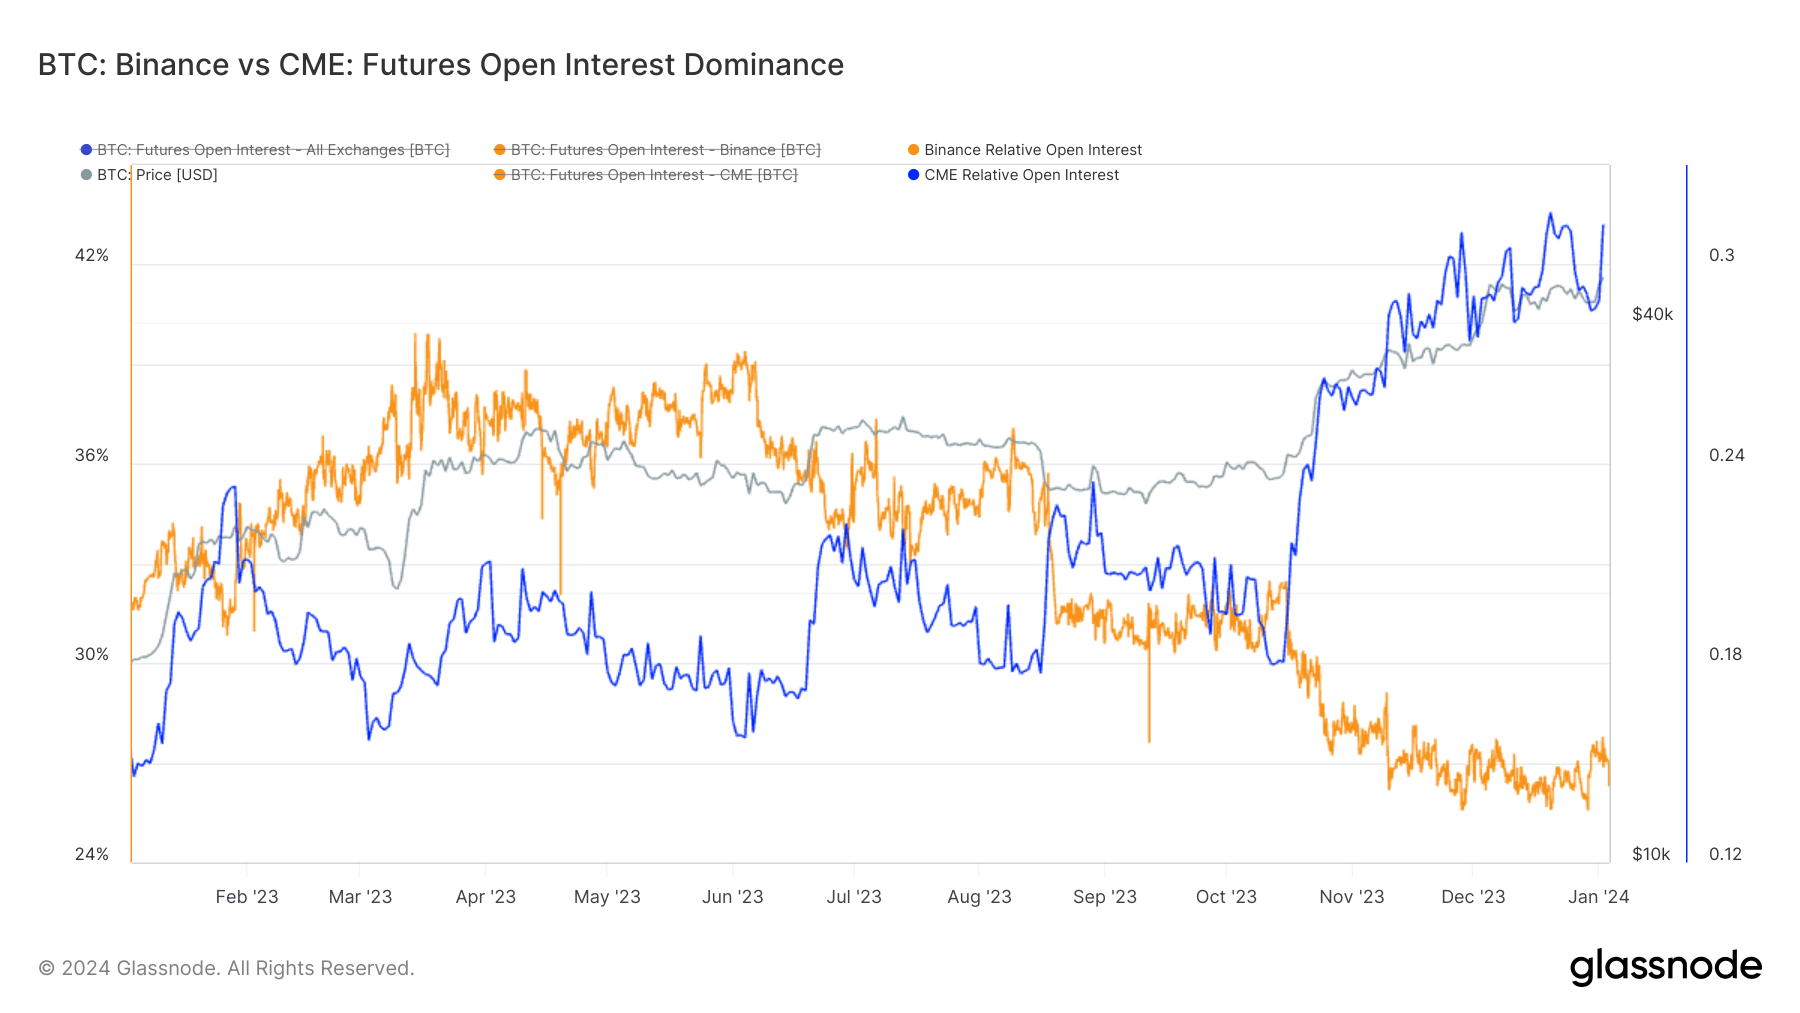 Binance vs CME Open Interest: (Source: Glassnode)